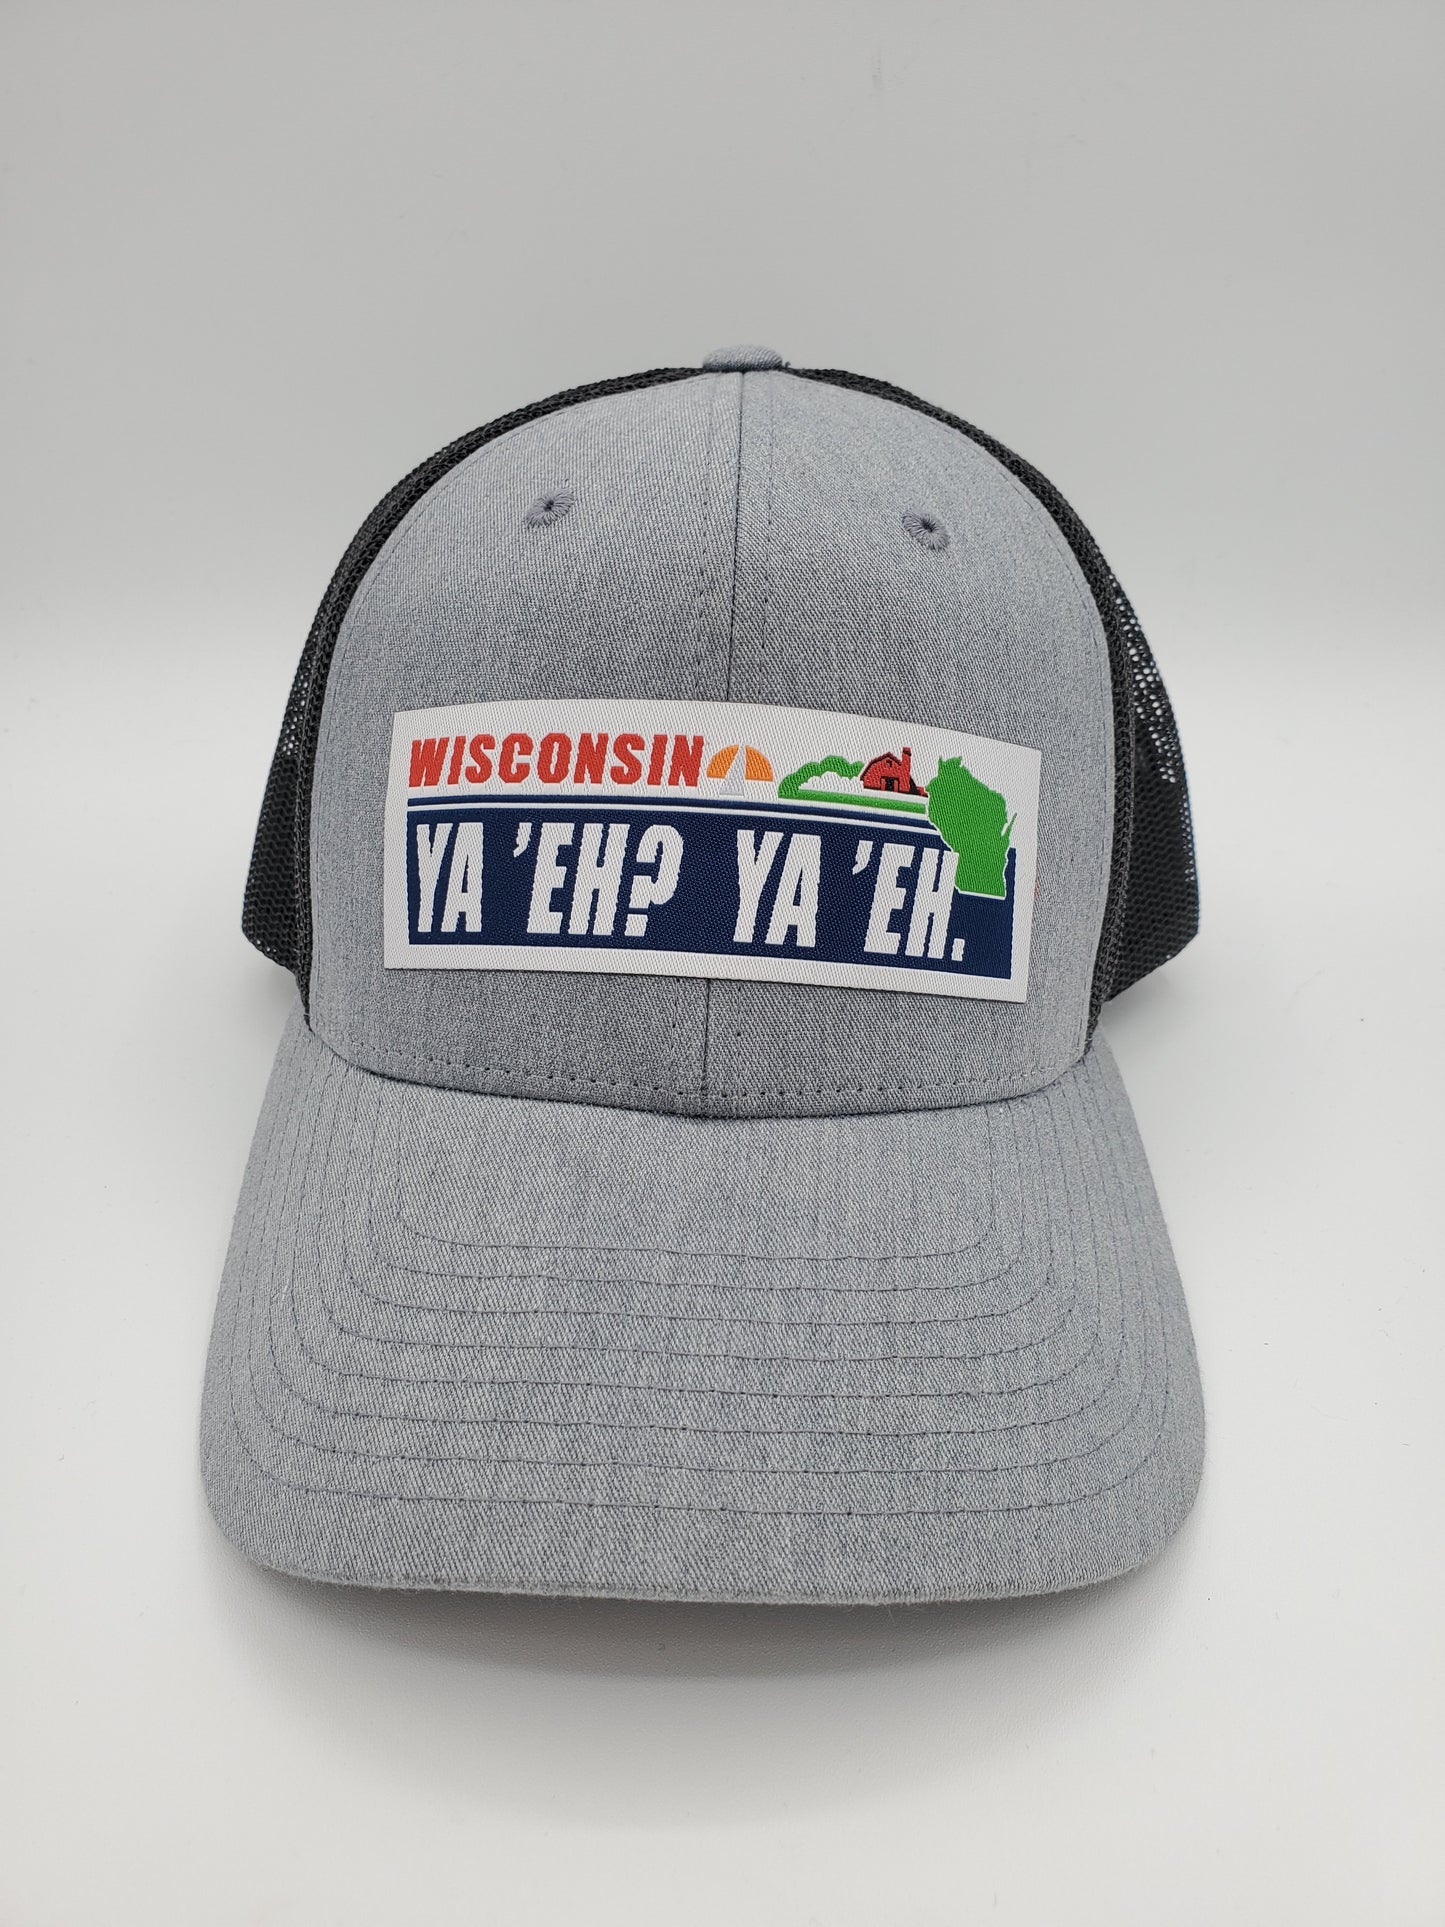 "Ya 'Eh? Ya 'Eh." Wisconsin Plate Design Trucker Hat (Black Mesh/ Heather Grey Fabric)